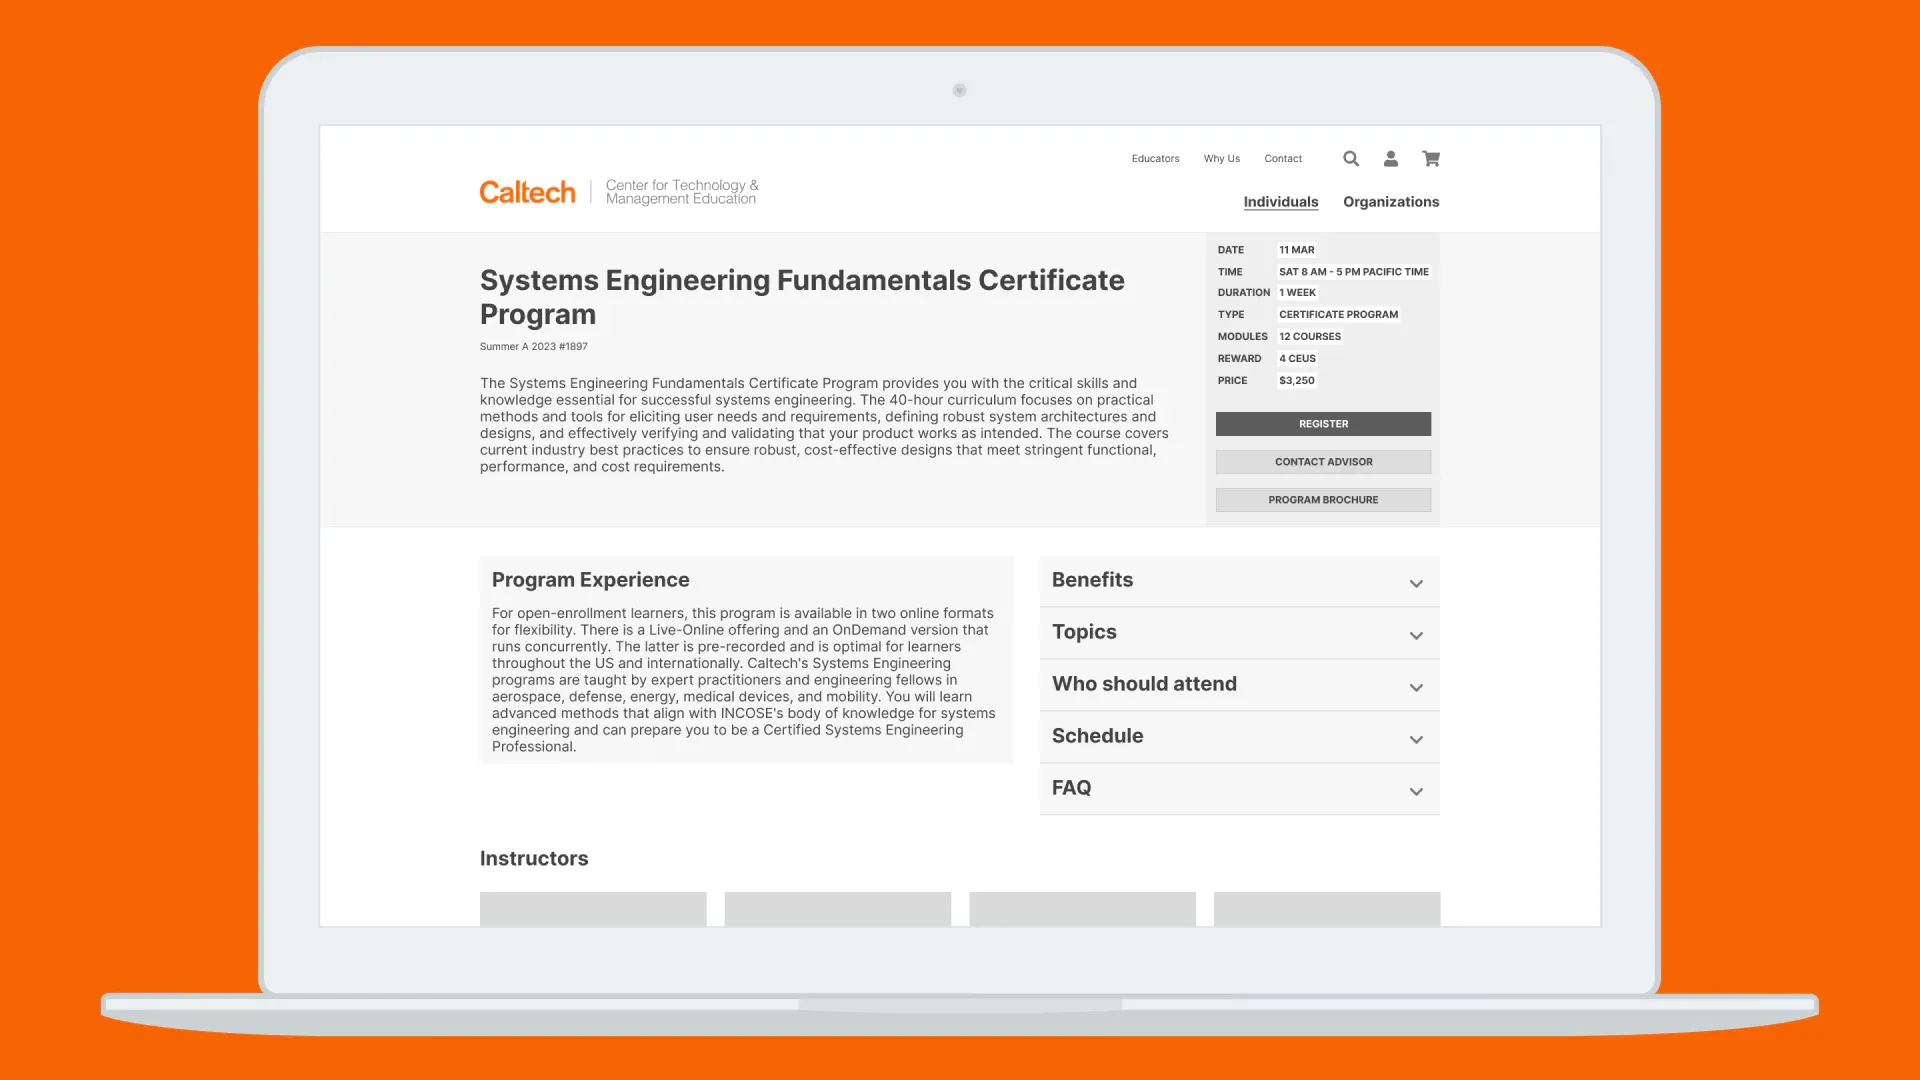 Caltech CTME Responsive eCommerce UX Design